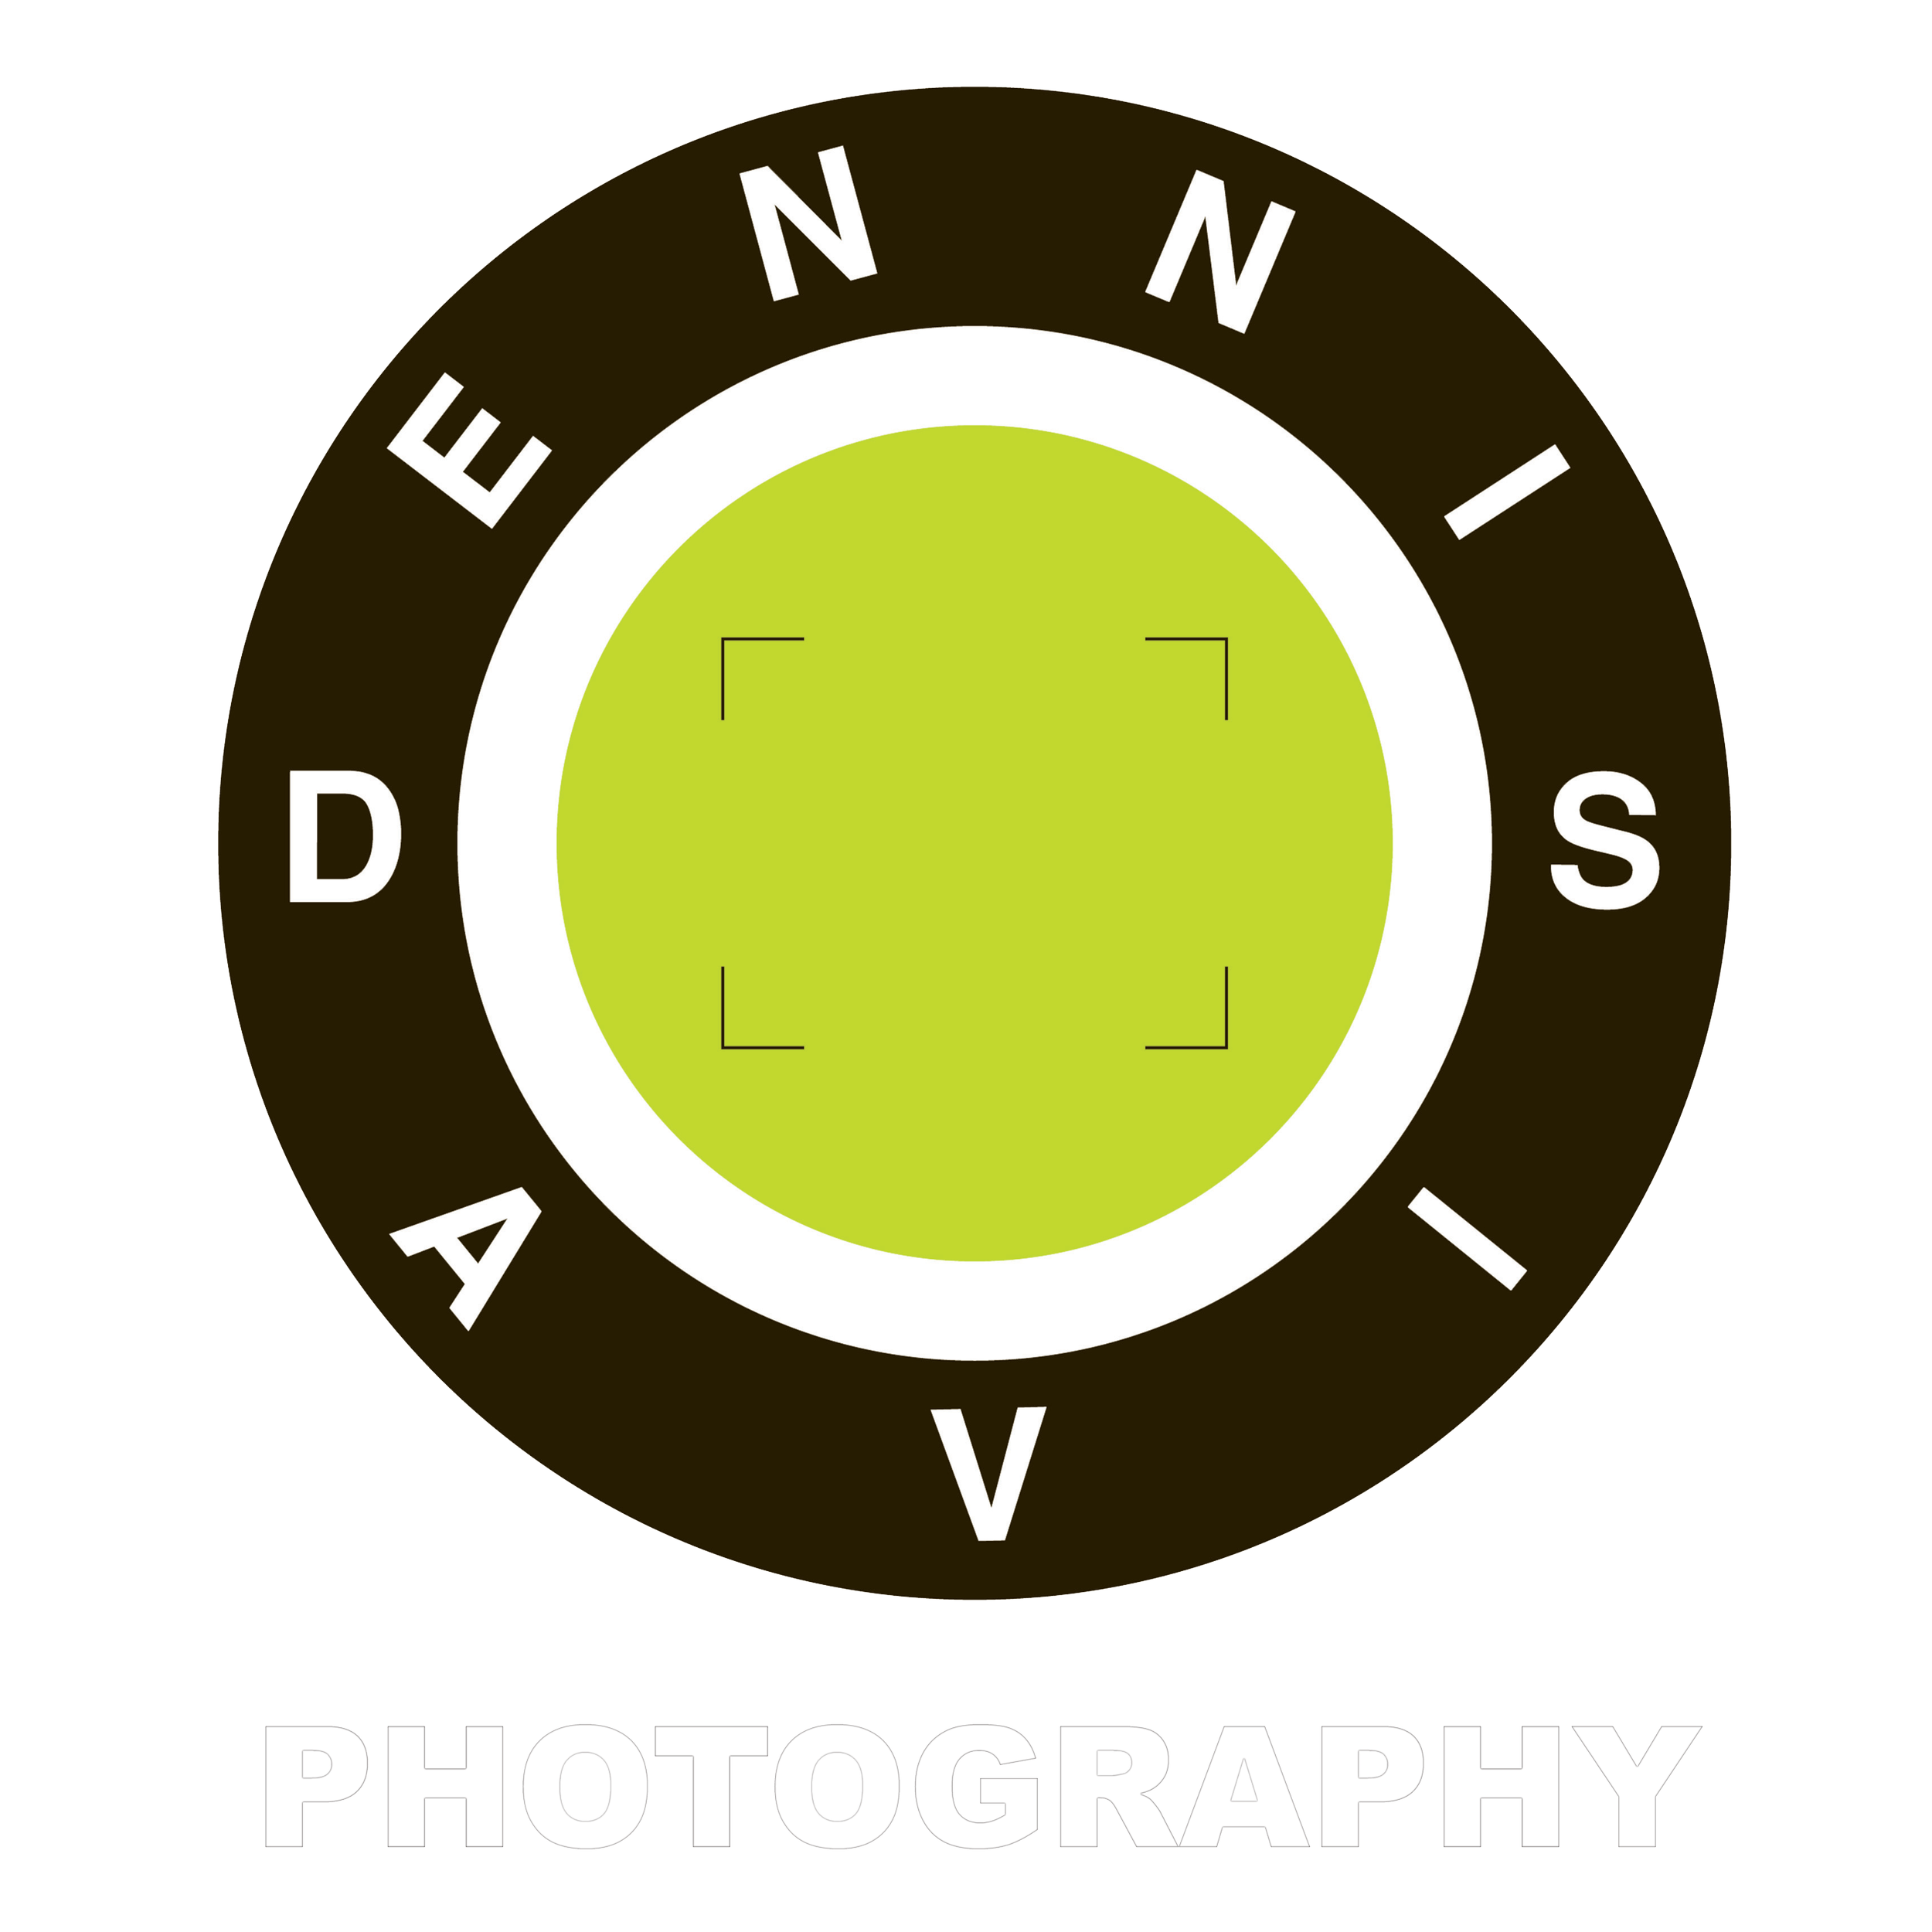 Dennis Davis Photography